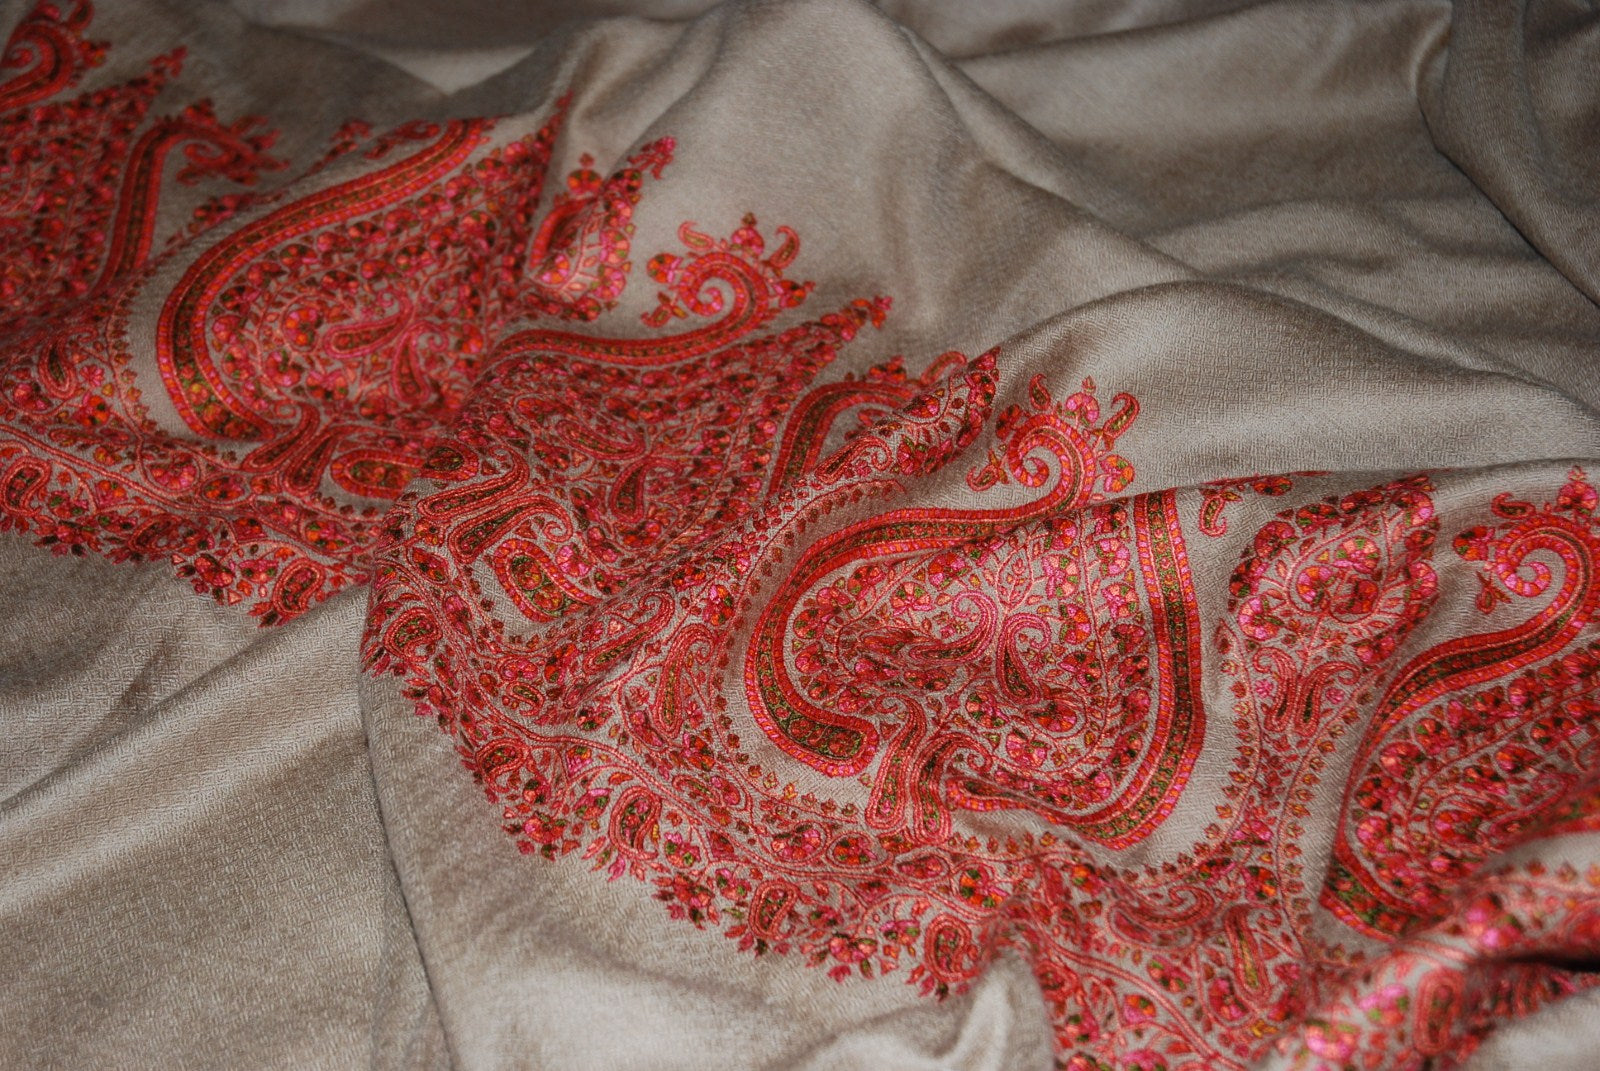 Kashmir Pashmina "Cashmere" Shawl Large Beige, Multicolor Embroidery #PDR-011